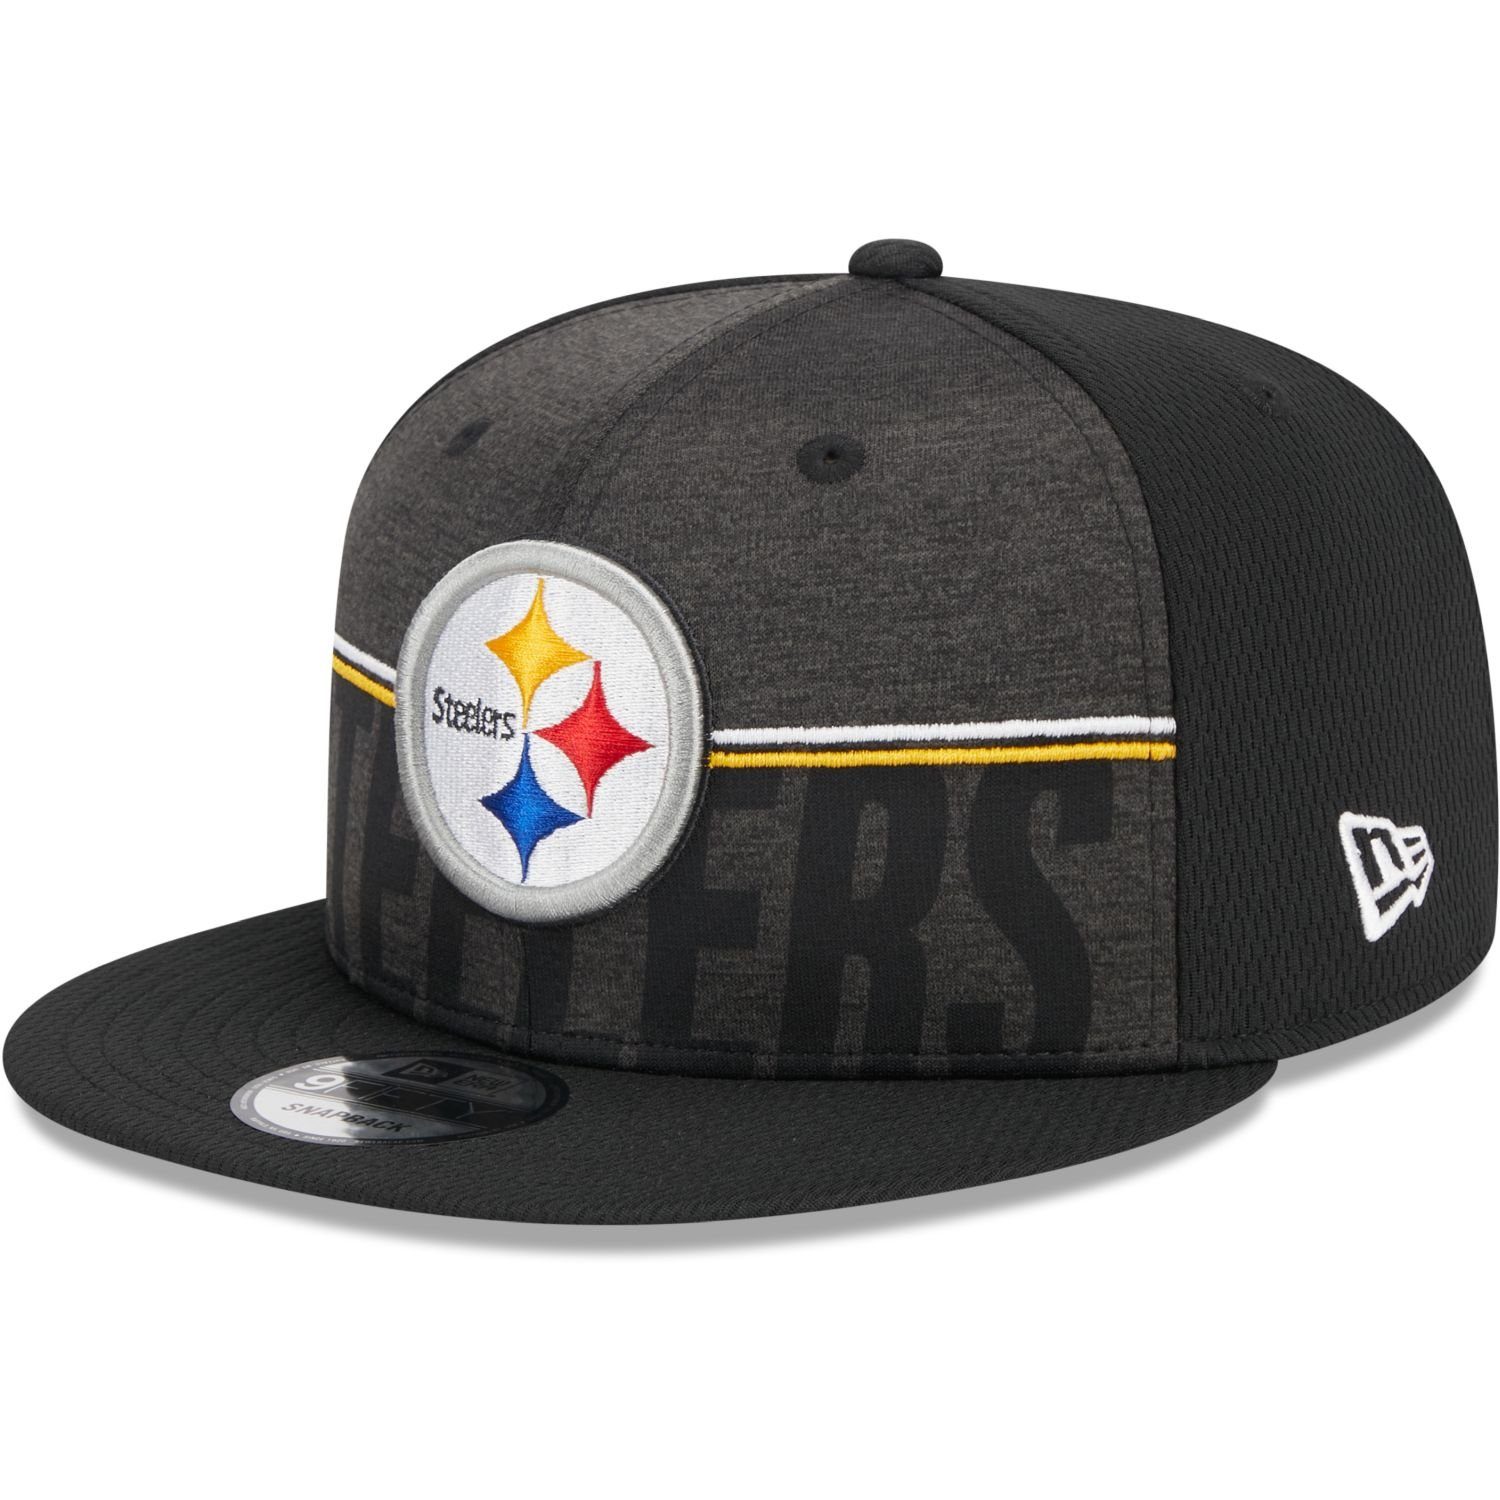 New Era Snapback Cap 9FIFTY TRAINING Pittsburgh Steelers